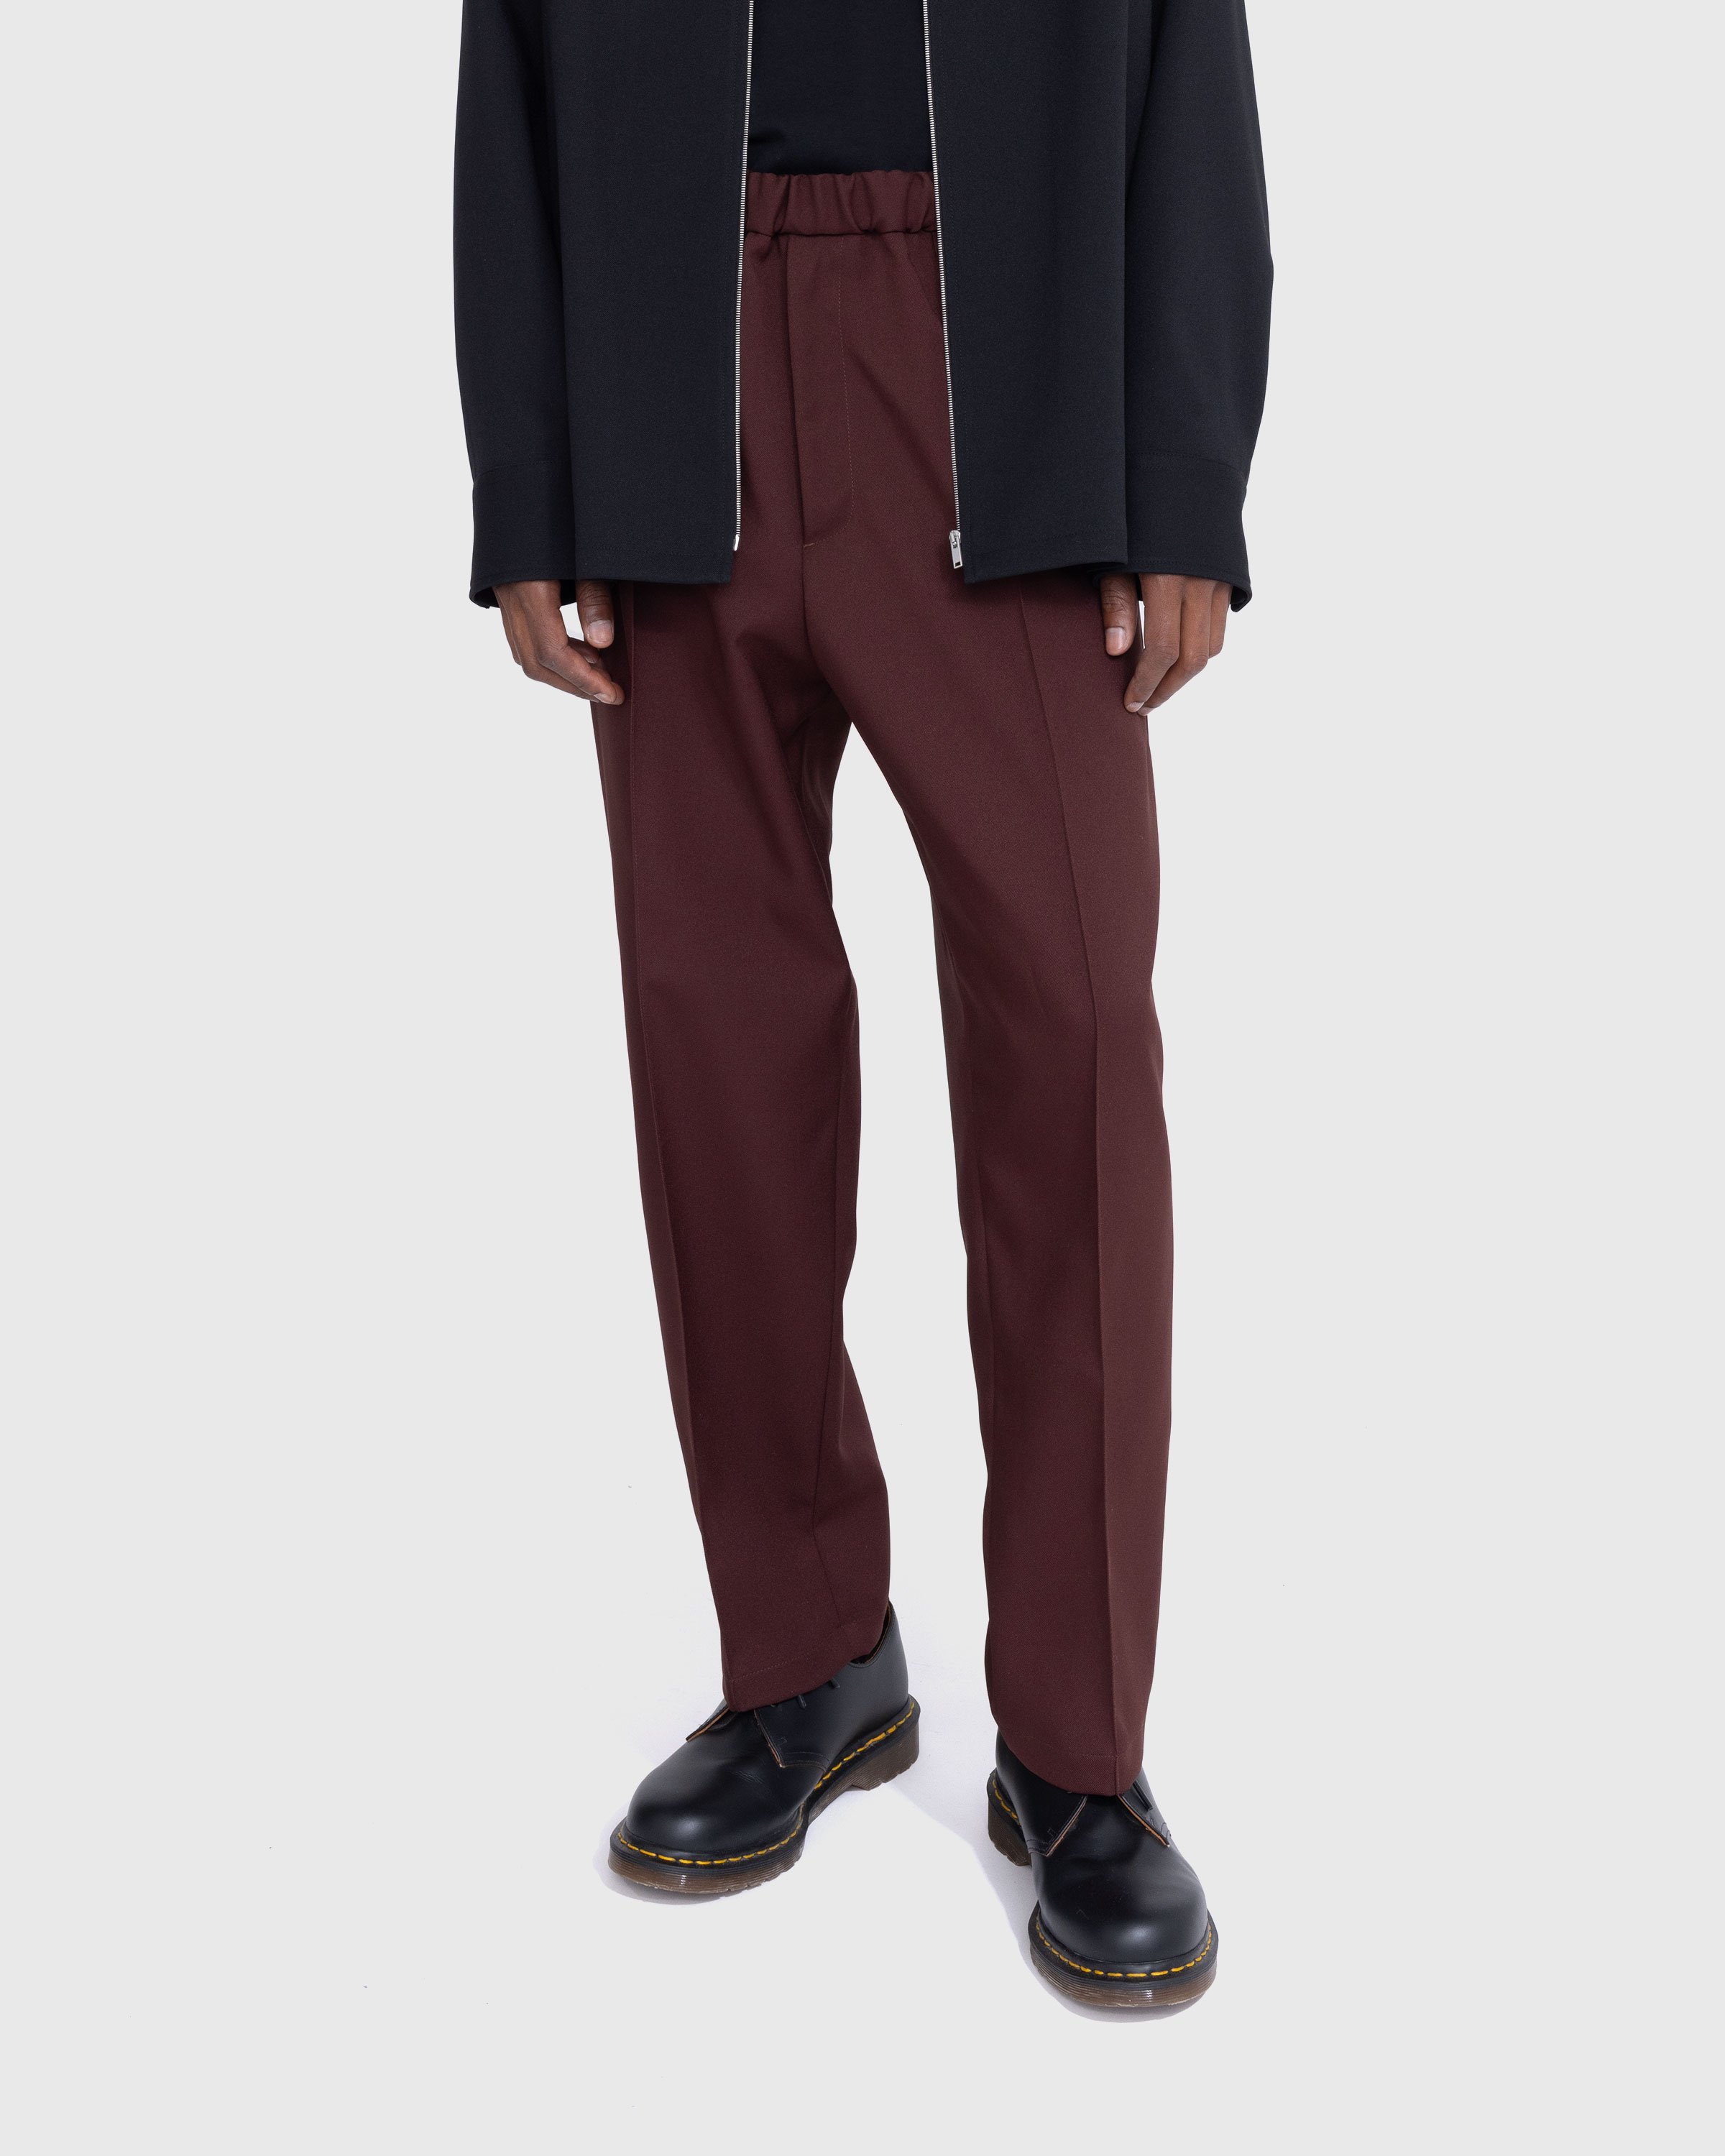 Jil Sander - Trouser D 09 AW 20 Mahogany - Clothing - Brown - Image 2